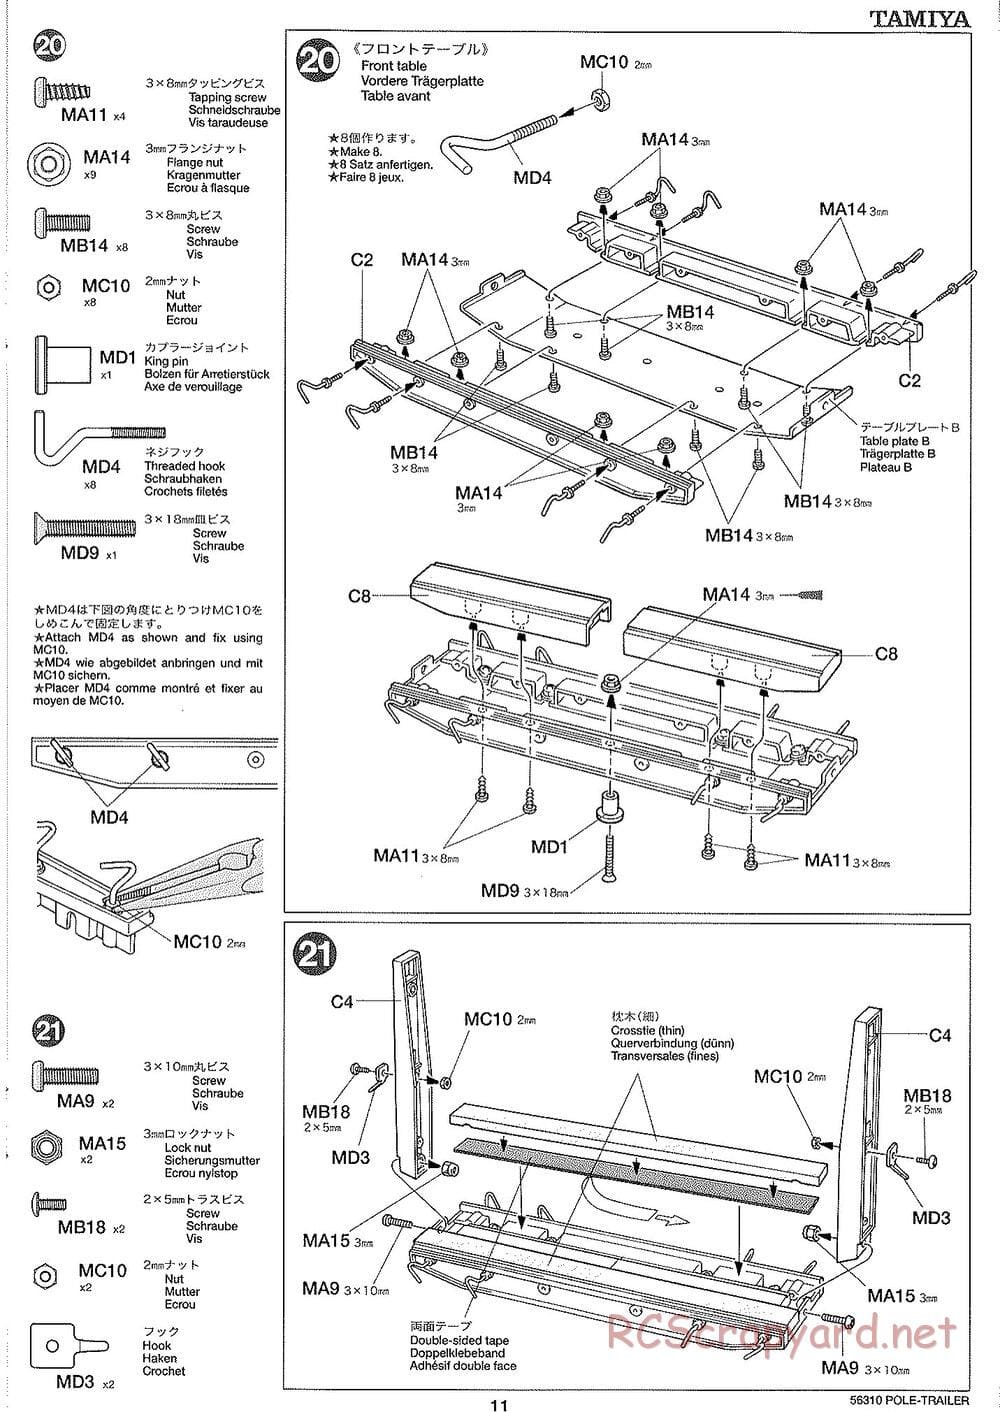 Tamiya - Semi Pole Trailer Chassis - Manual - Page 11